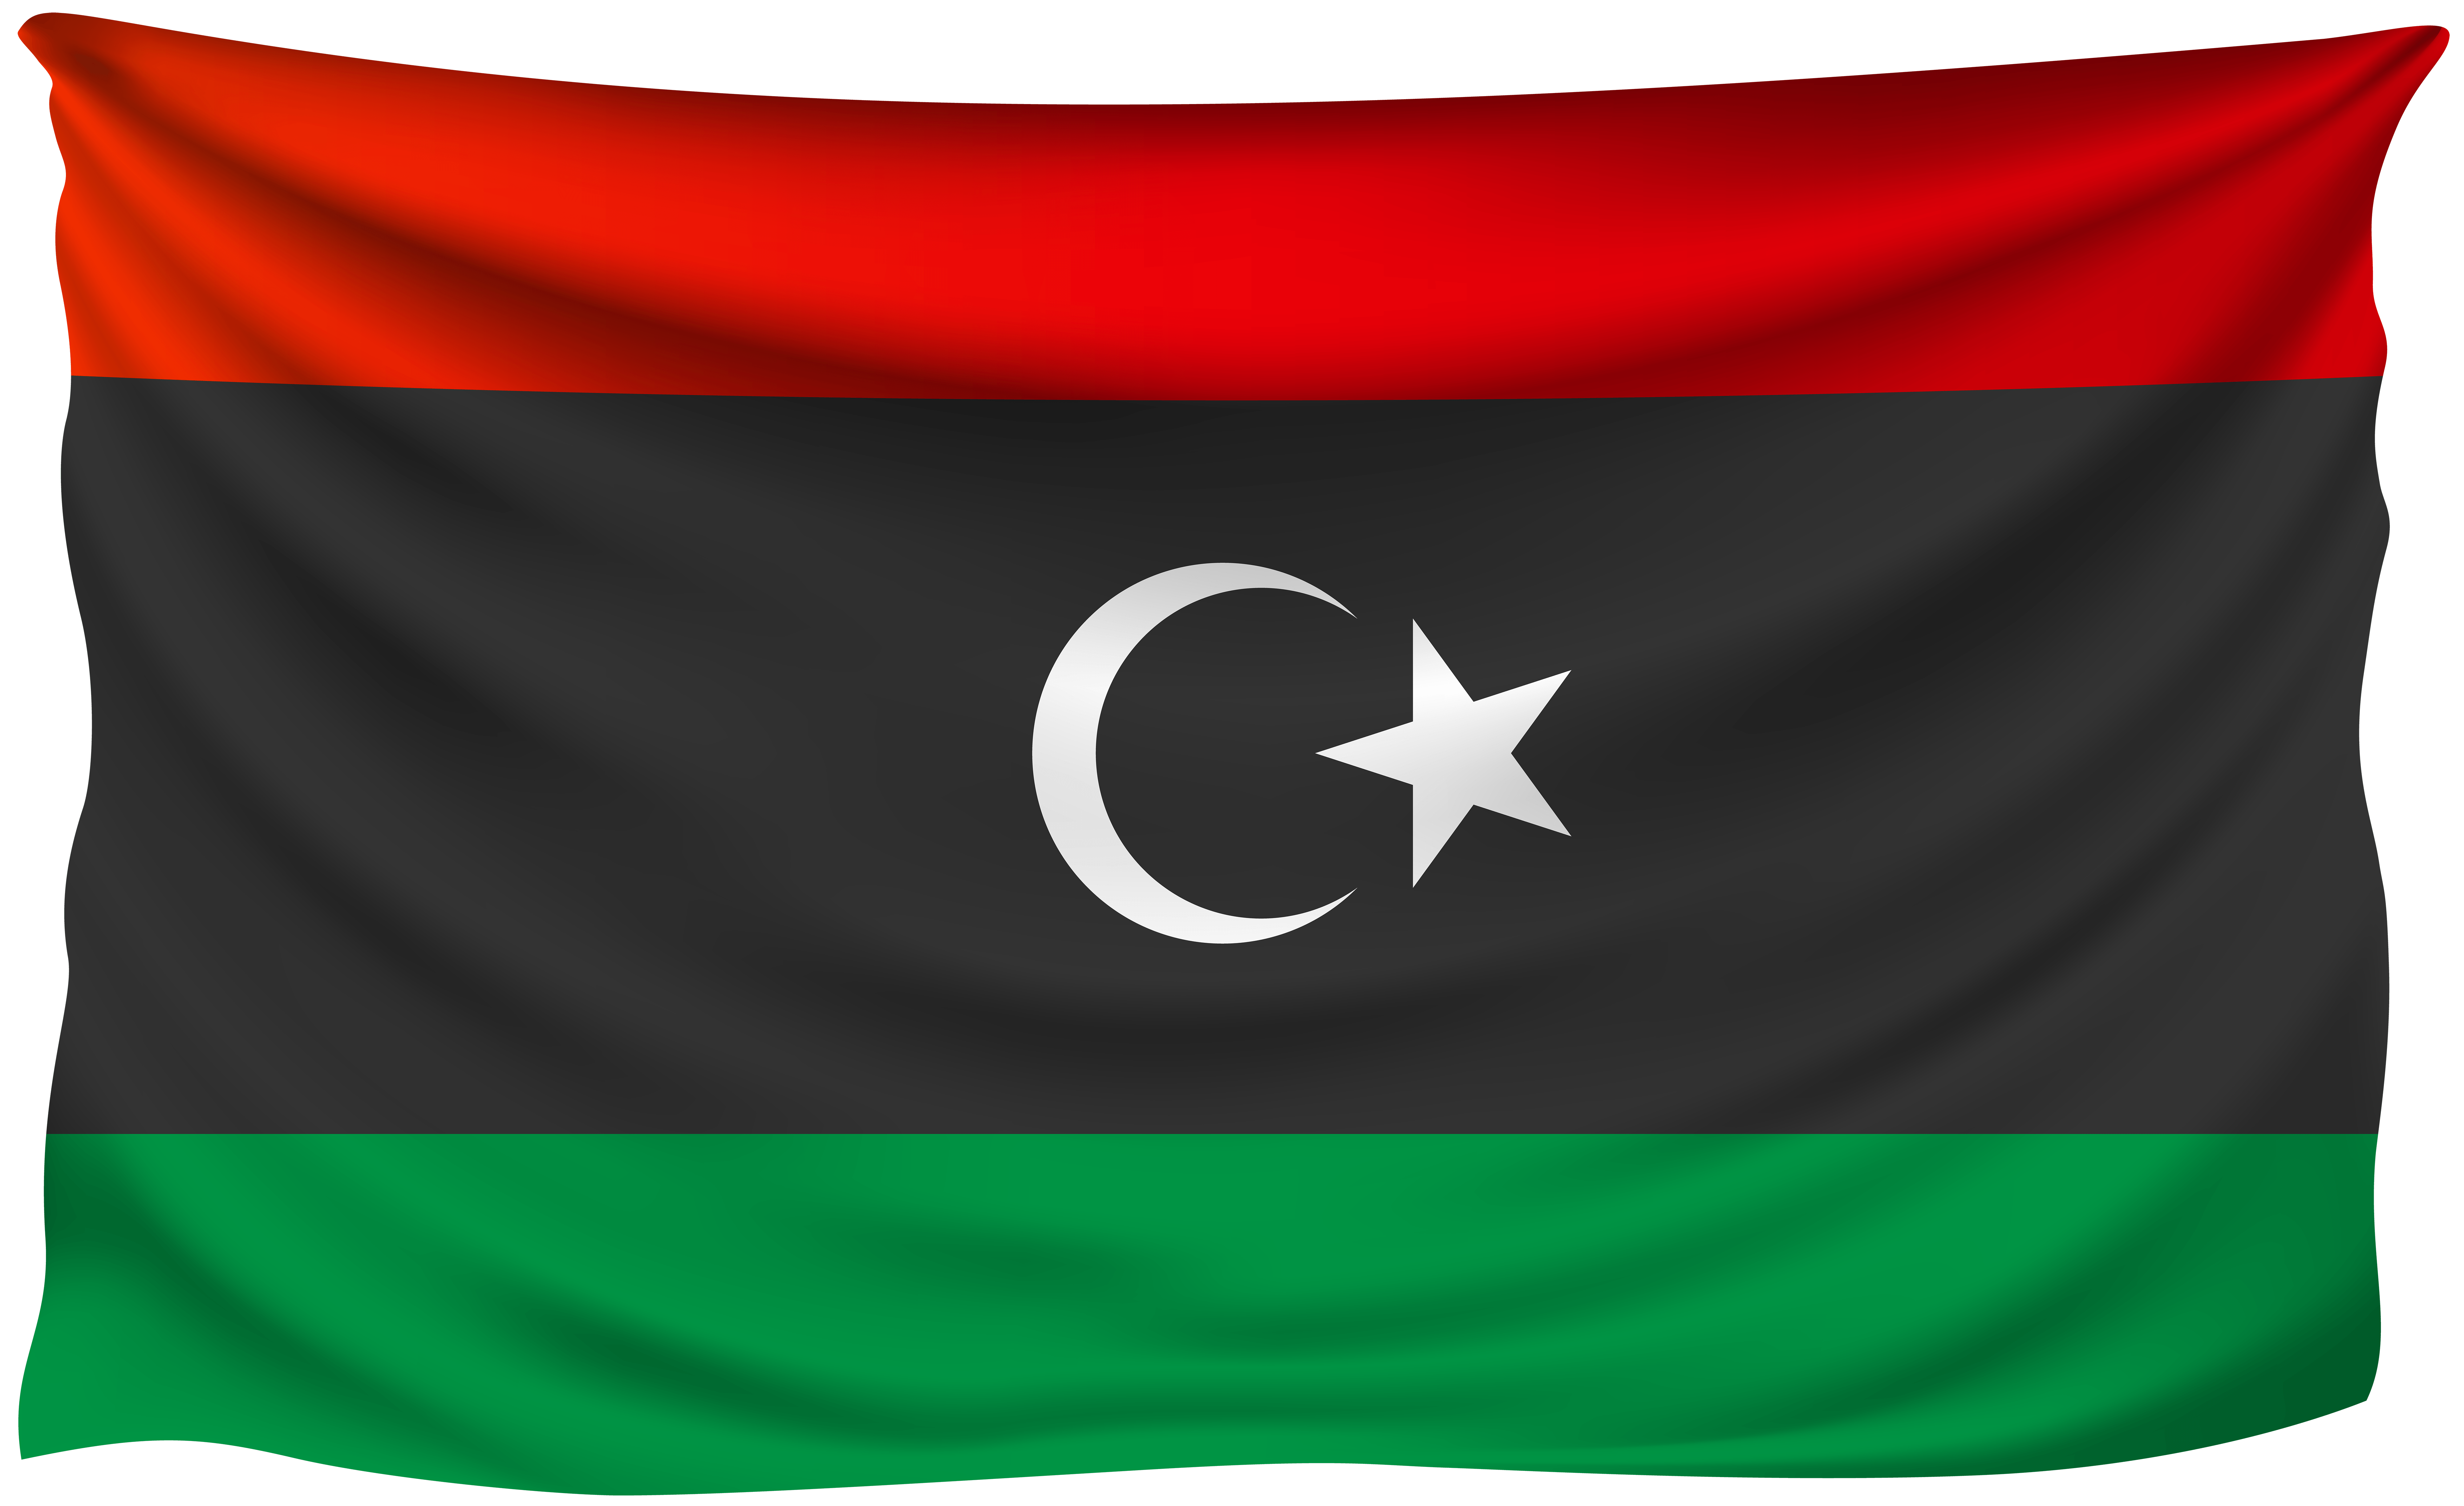 Libya Wrinkled Flag Quality Image